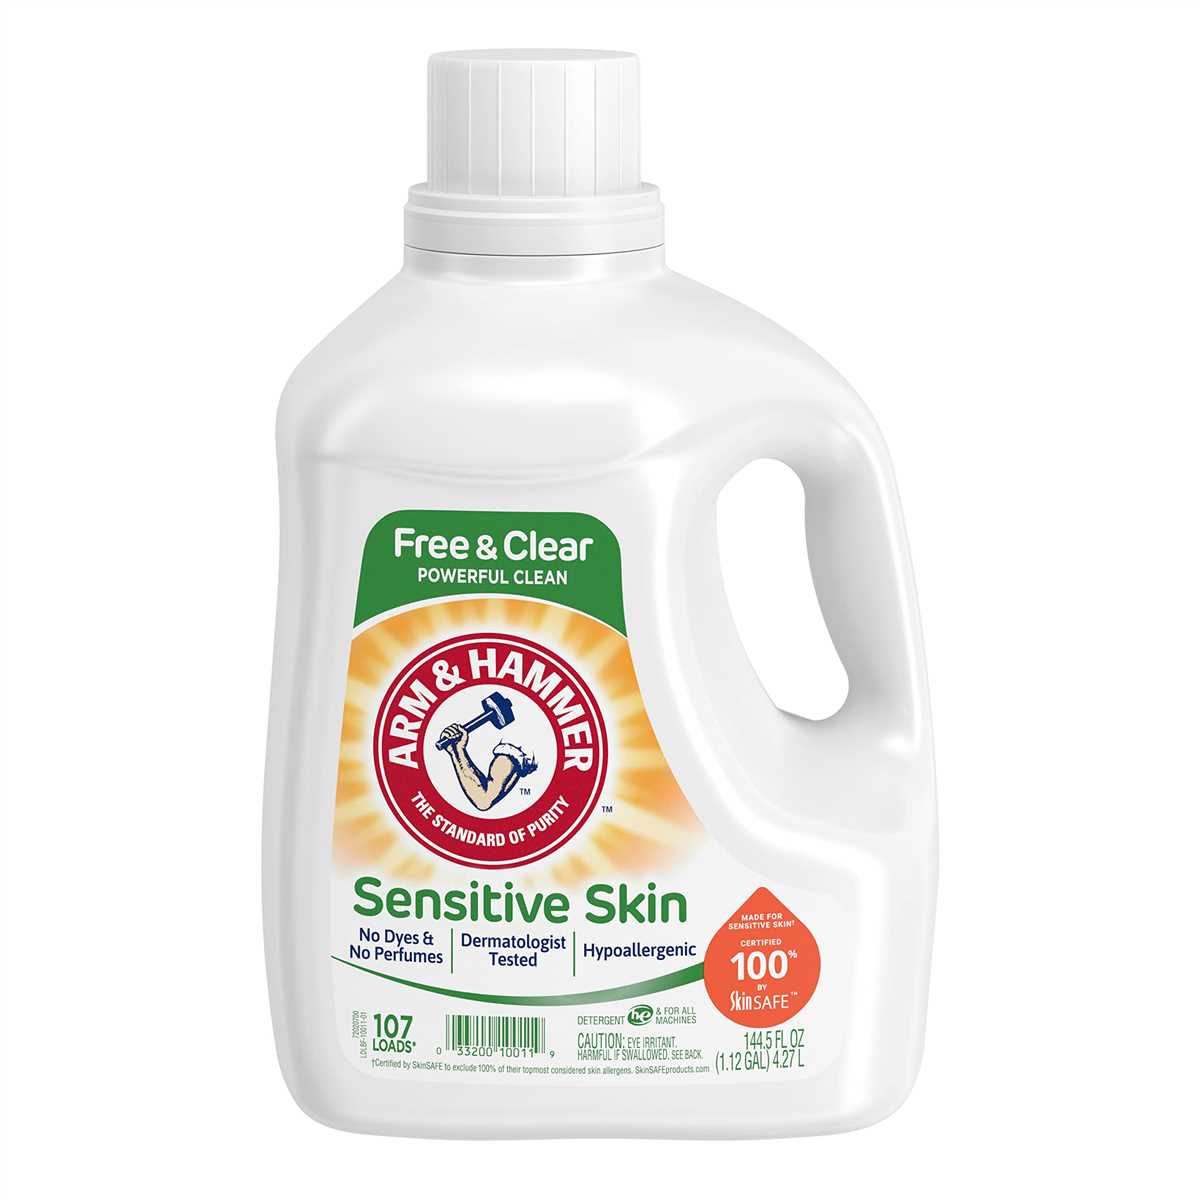 3. [Brand Name] Gentle & Hypoallergenic Laundry Detergent